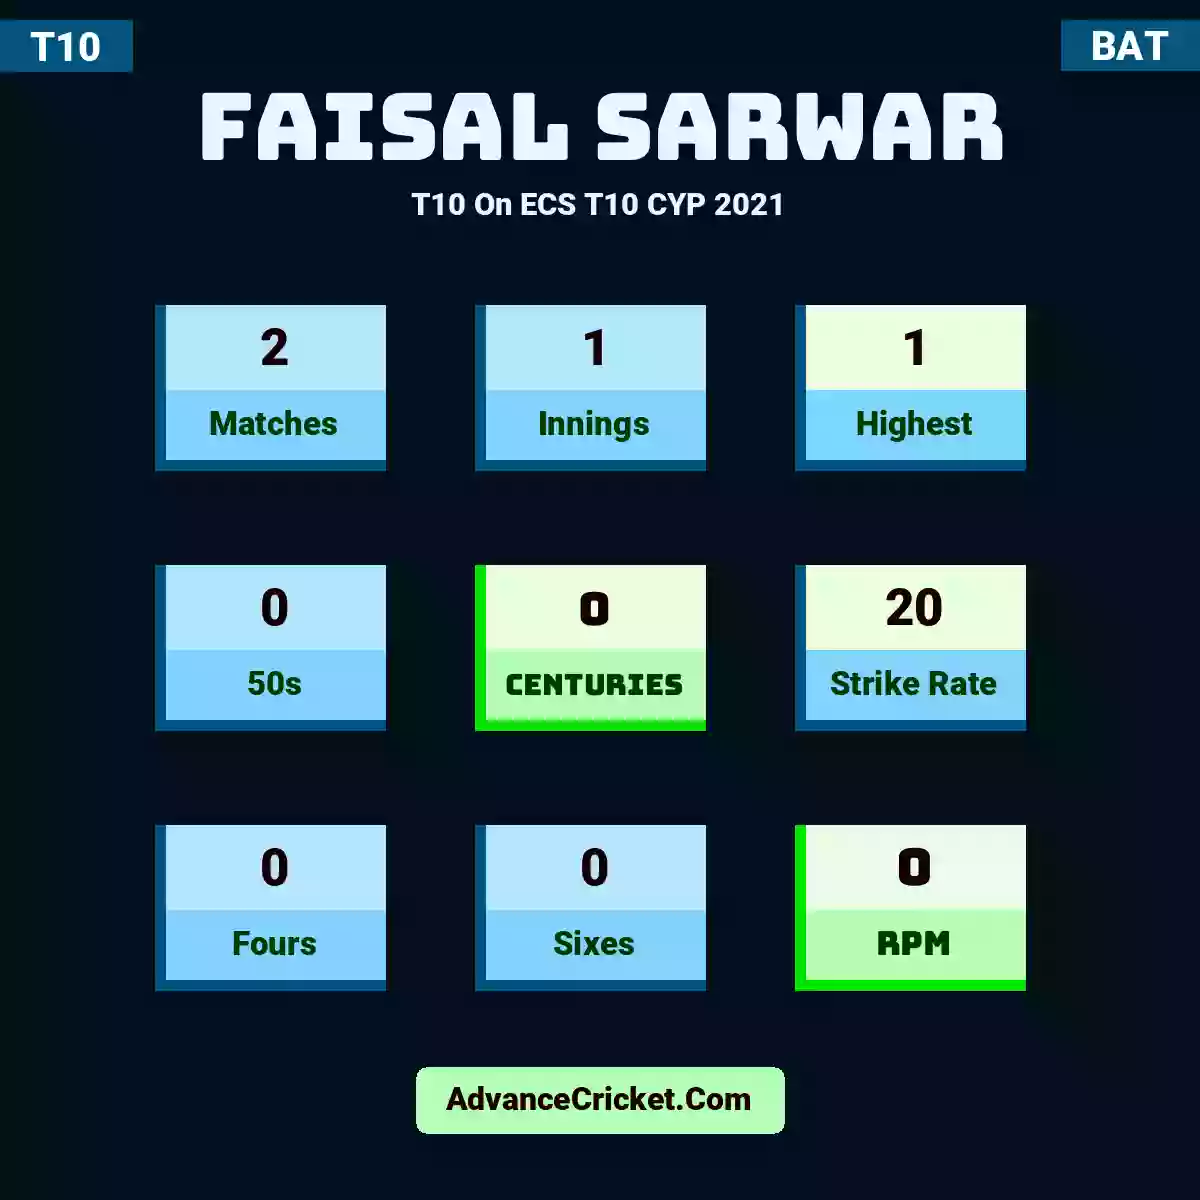 Faisal Sarwar T10  On ECS T10 CYP 2021, Faisal Sarwar played 2 matches, scored 1 runs as highest, 0 half-centuries, and 0 centuries, with a strike rate of 20. F.Sarwar hit 0 fours and 0 sixes, with an RPM of 0.